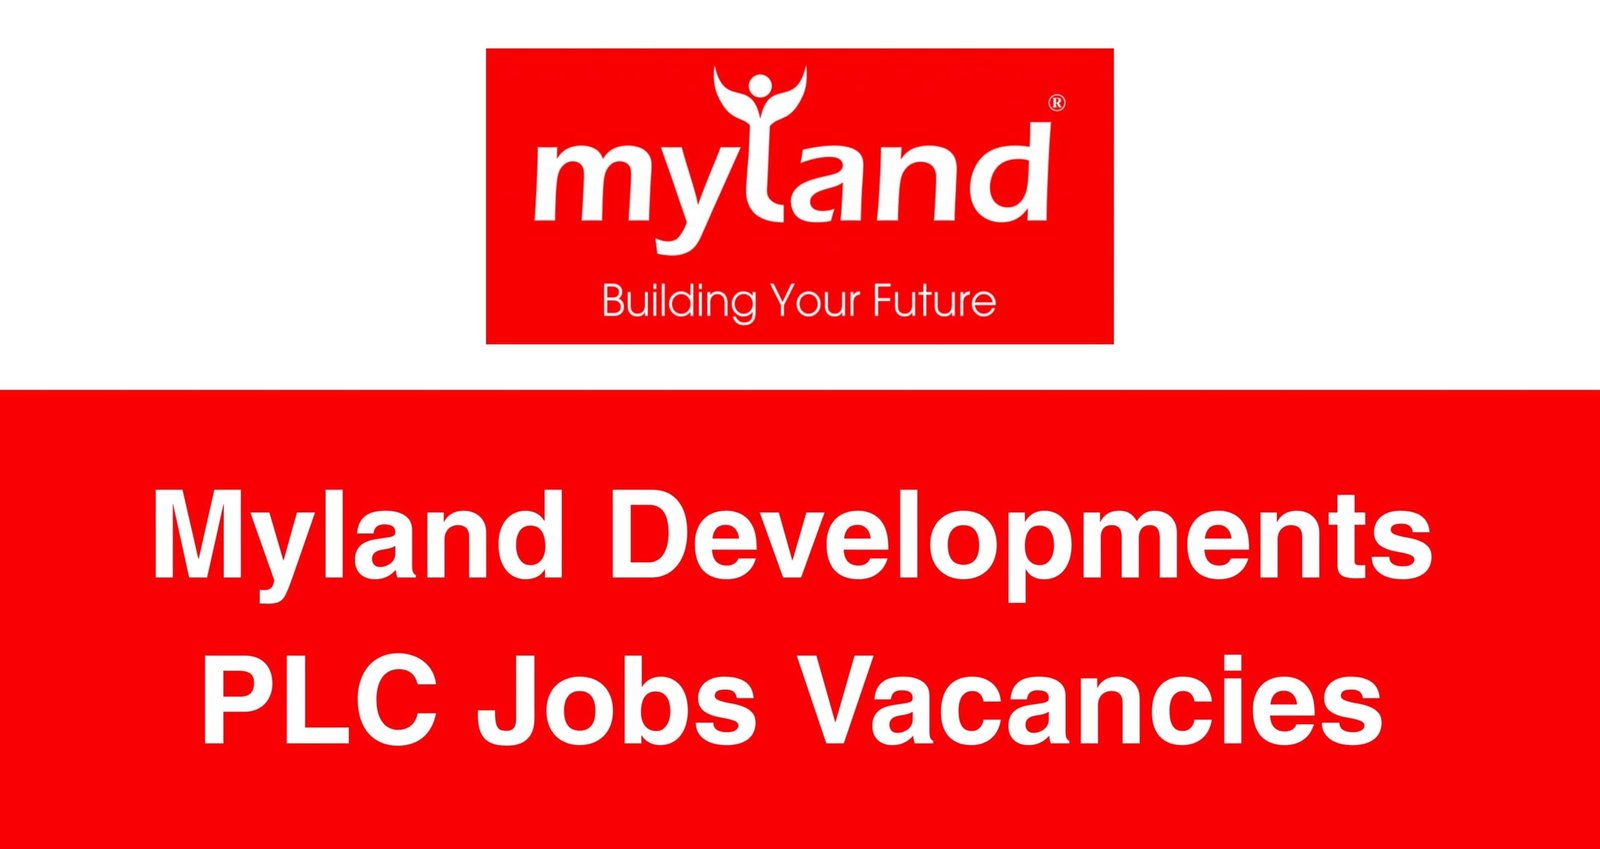 Myland Developments PLC Jobs Vacancies